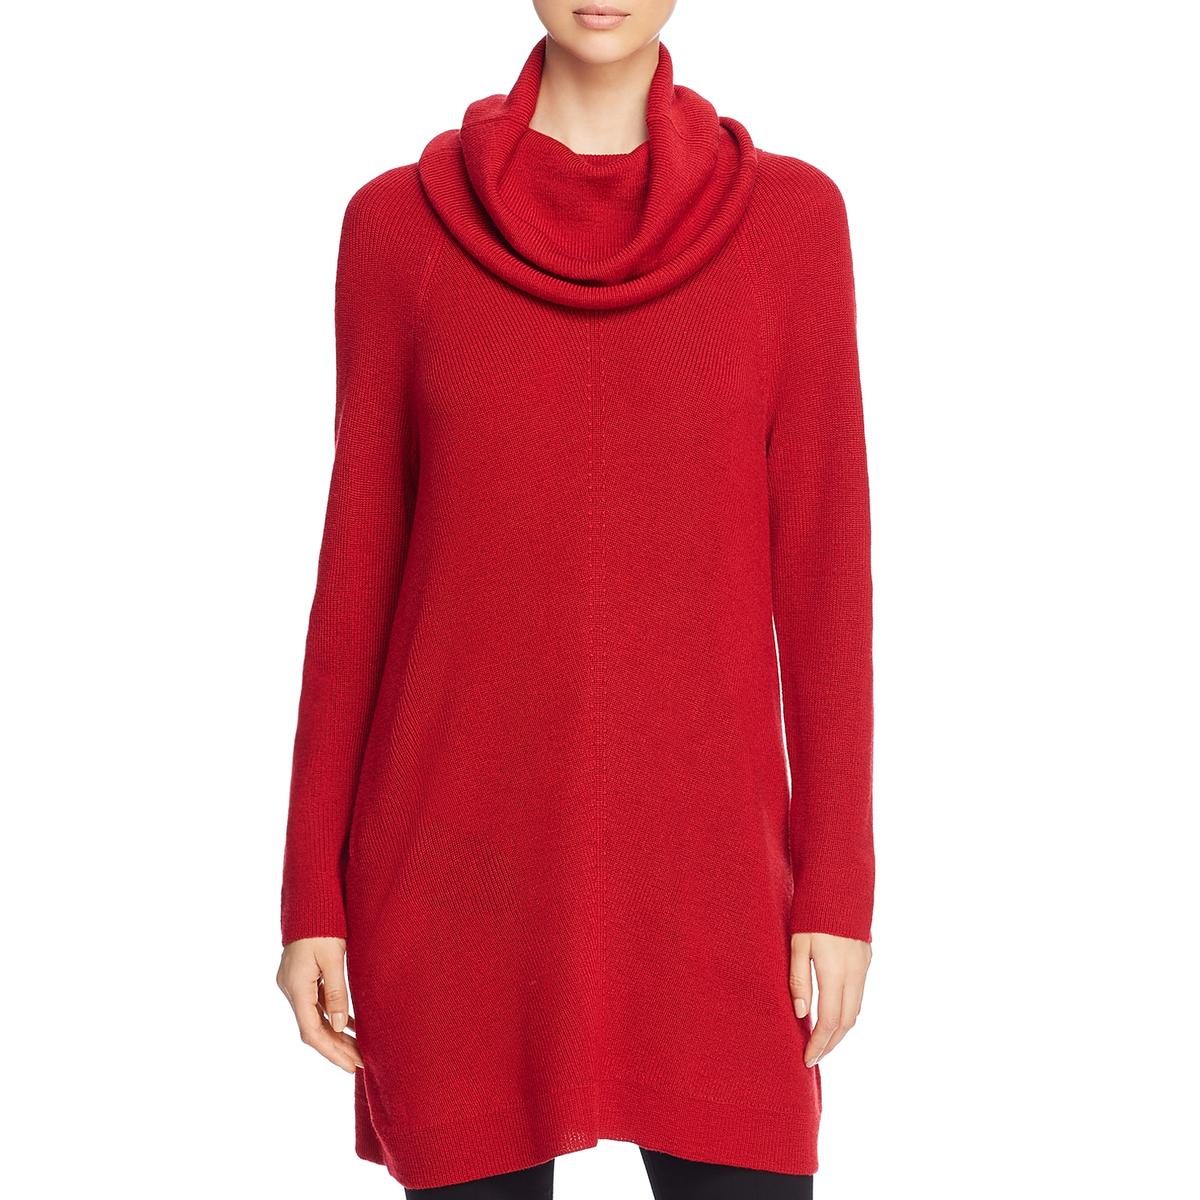 Eileen Fisher Womens Red Merino Wool Cowl-Neck Tunic Sweater Top L BHFO